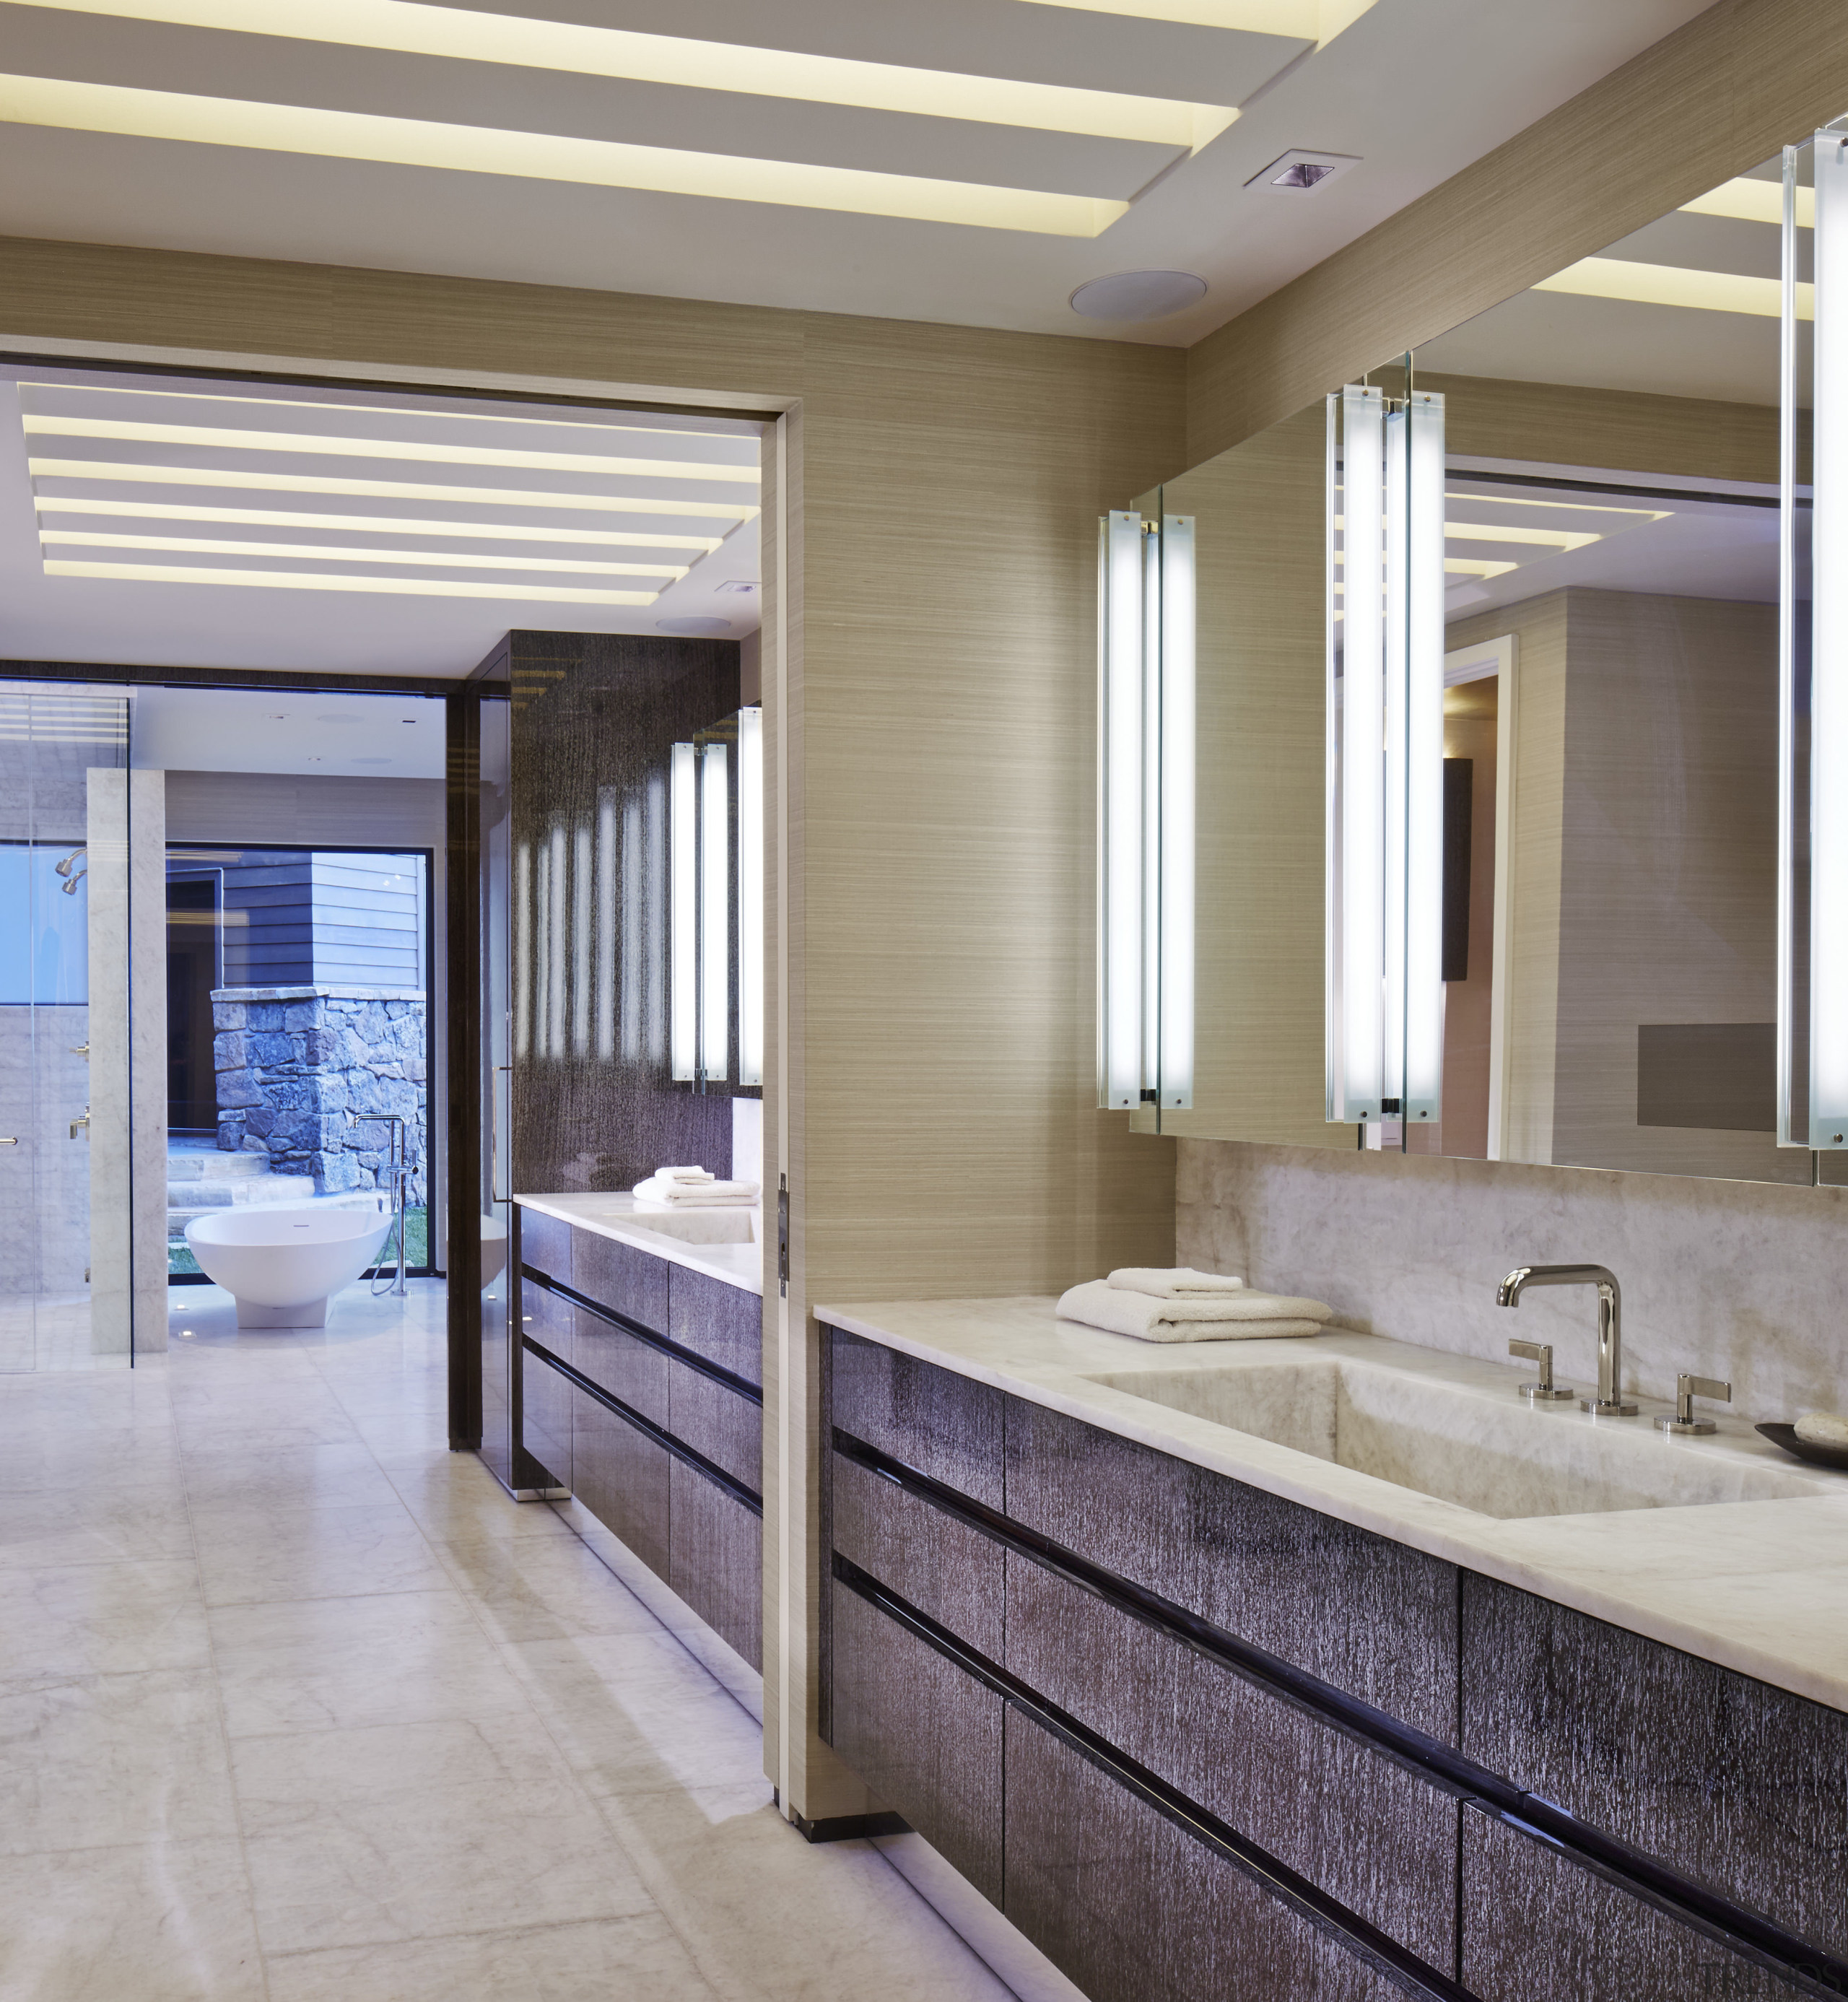 To create the distinctive look on the cabinetry bathroom, ceiling, floor, flooring, interior design, window, gray